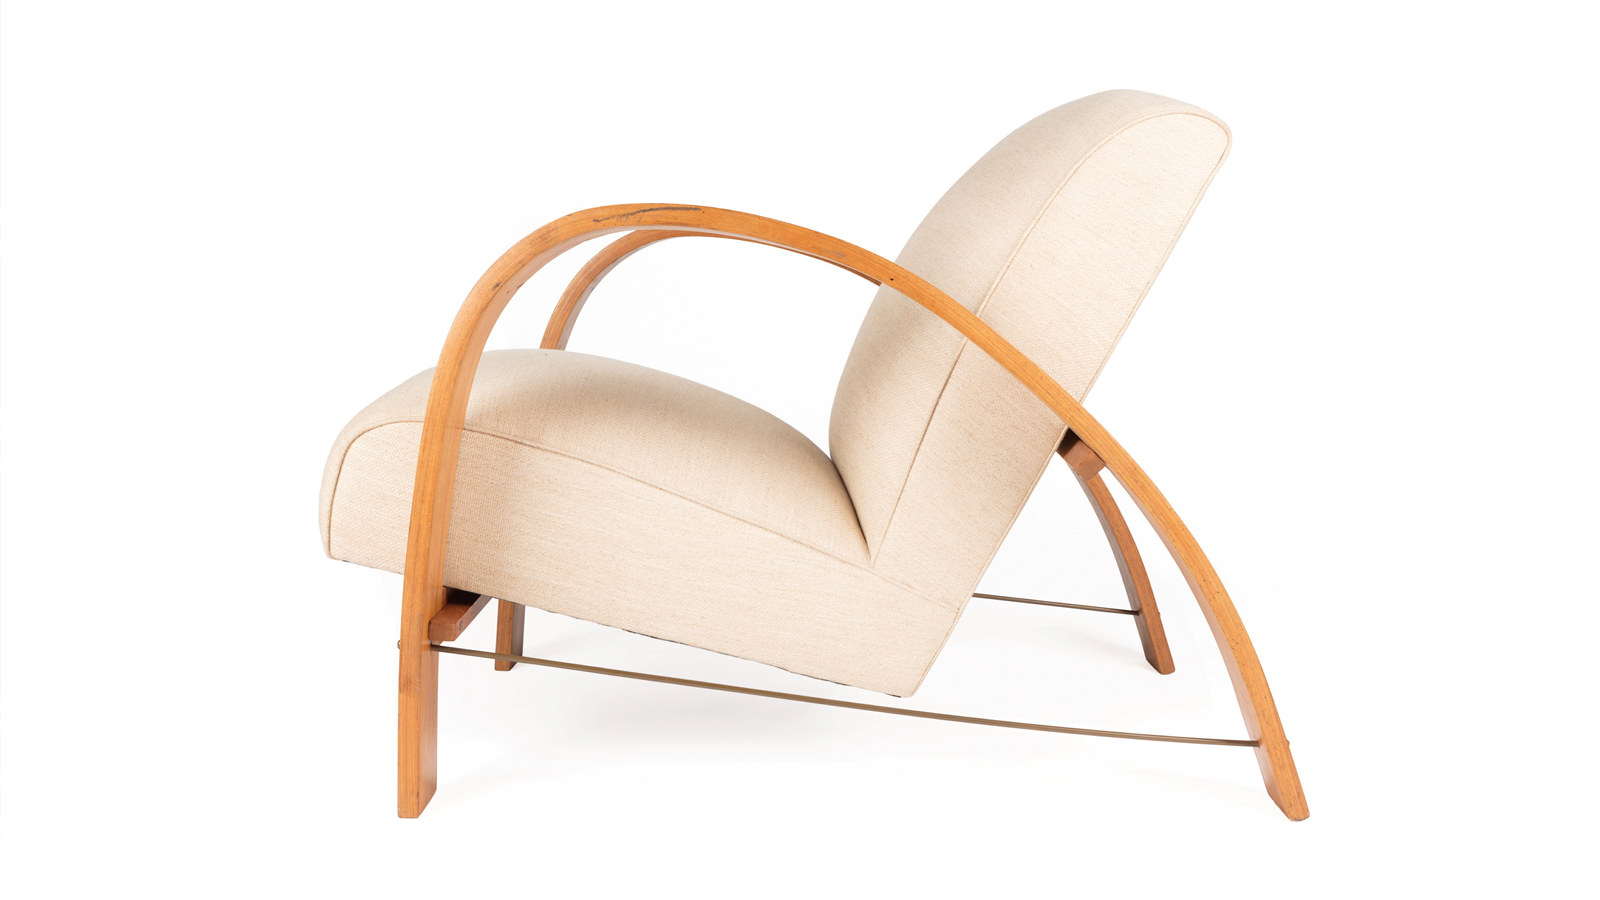 Easy chair designed by Steven Kalmar, Sydney, c1948.